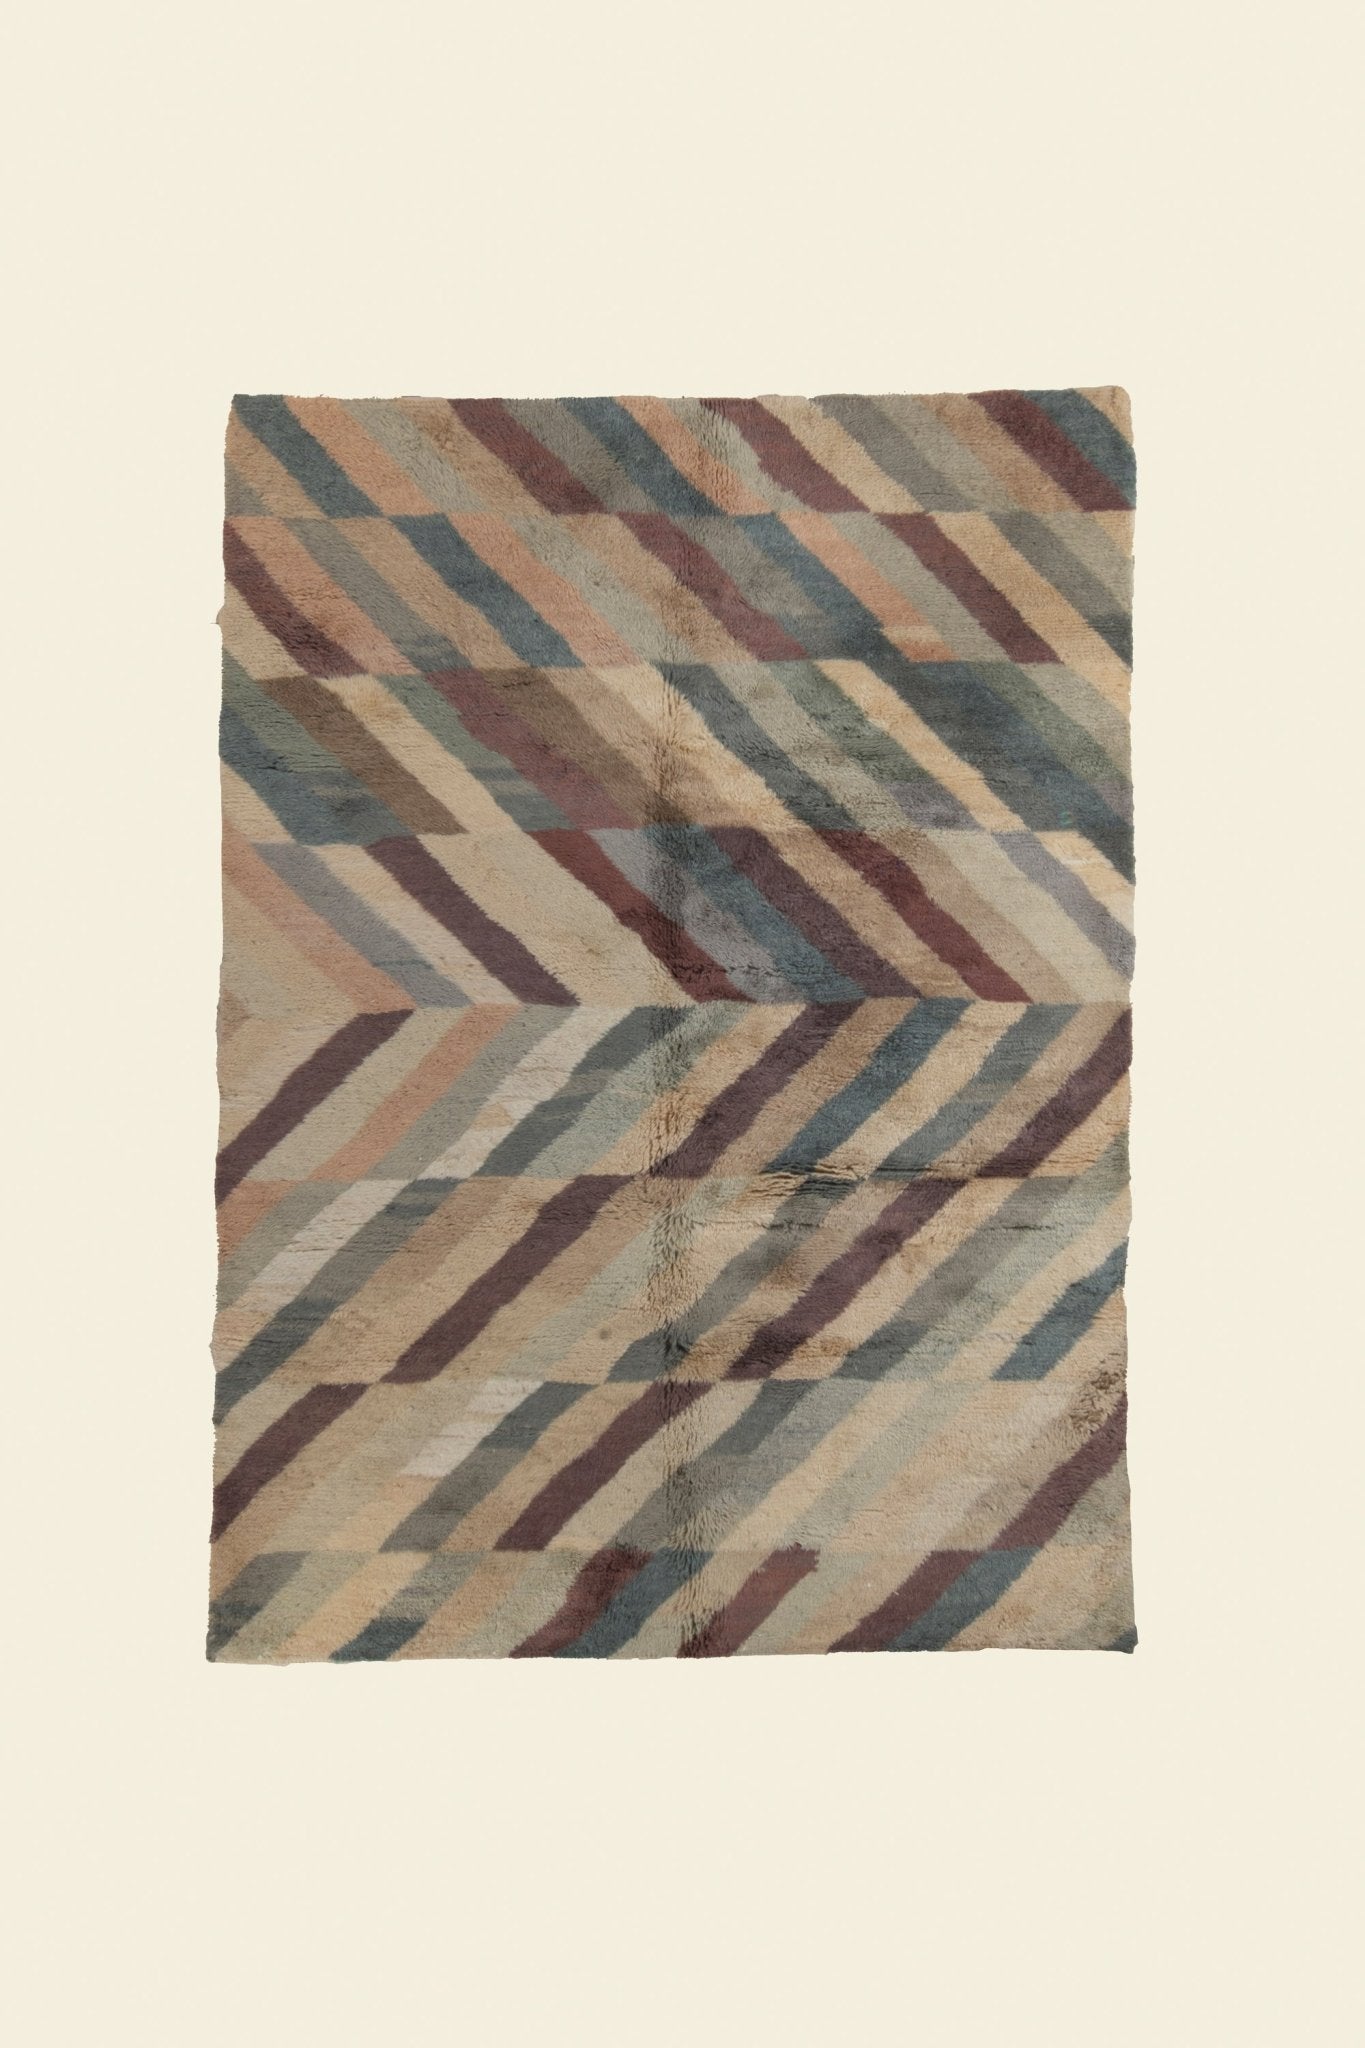 Contemporary Beni Mrirt Berber Rug 5'31" x 7'38" - 162 cm x 225 cm (Wool) - Dar Bouchaib Marrakech